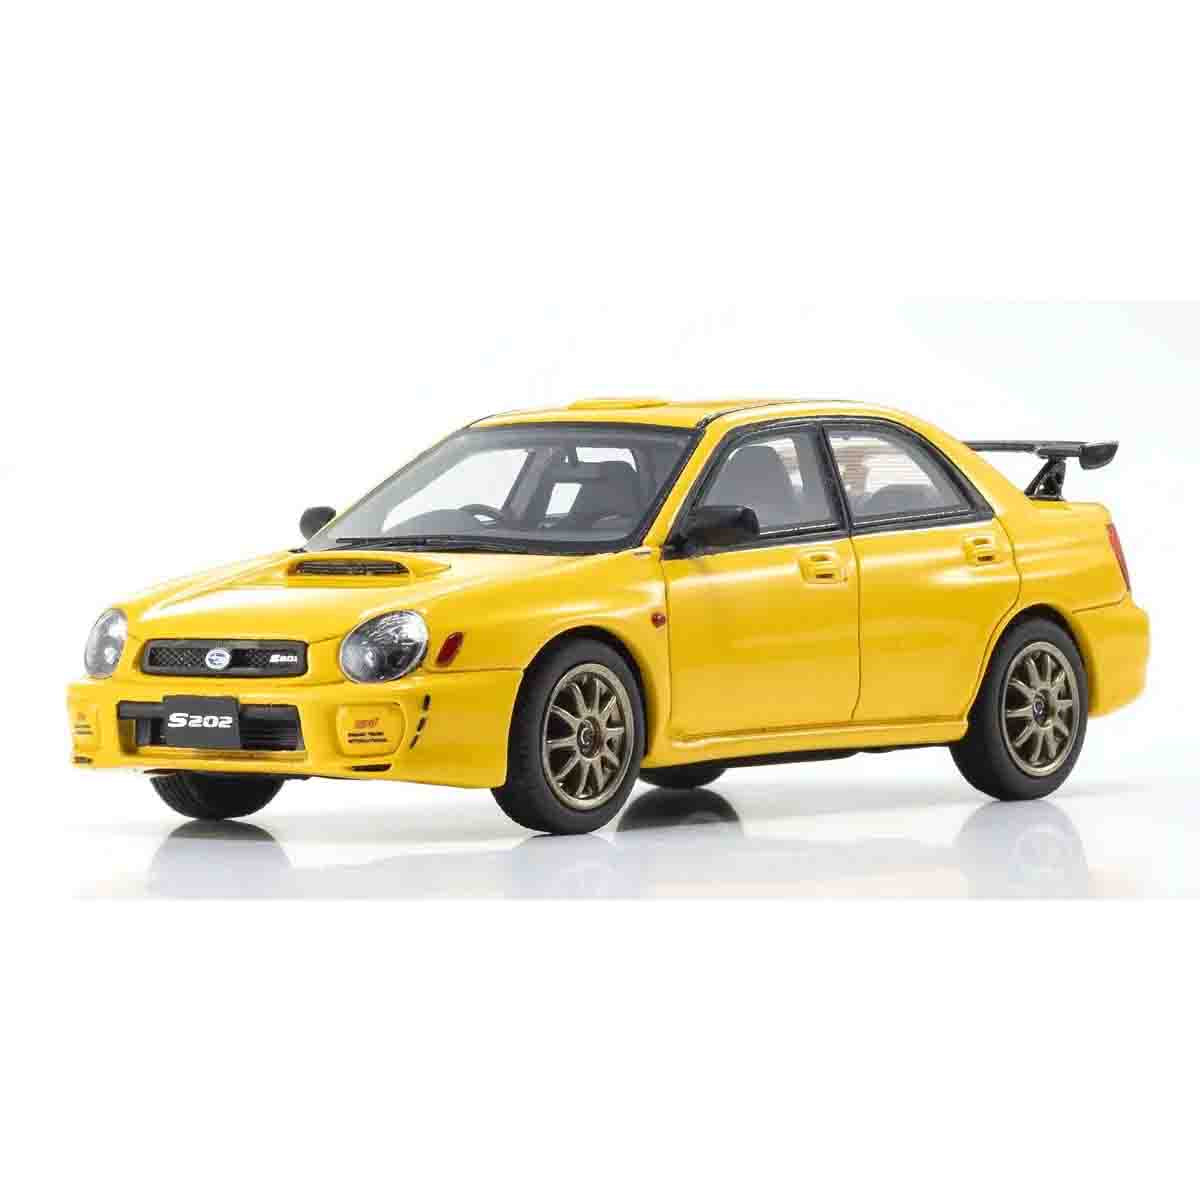 SUBARU Impreza S202 Yellow - 1:43 Scale Resin Model Car